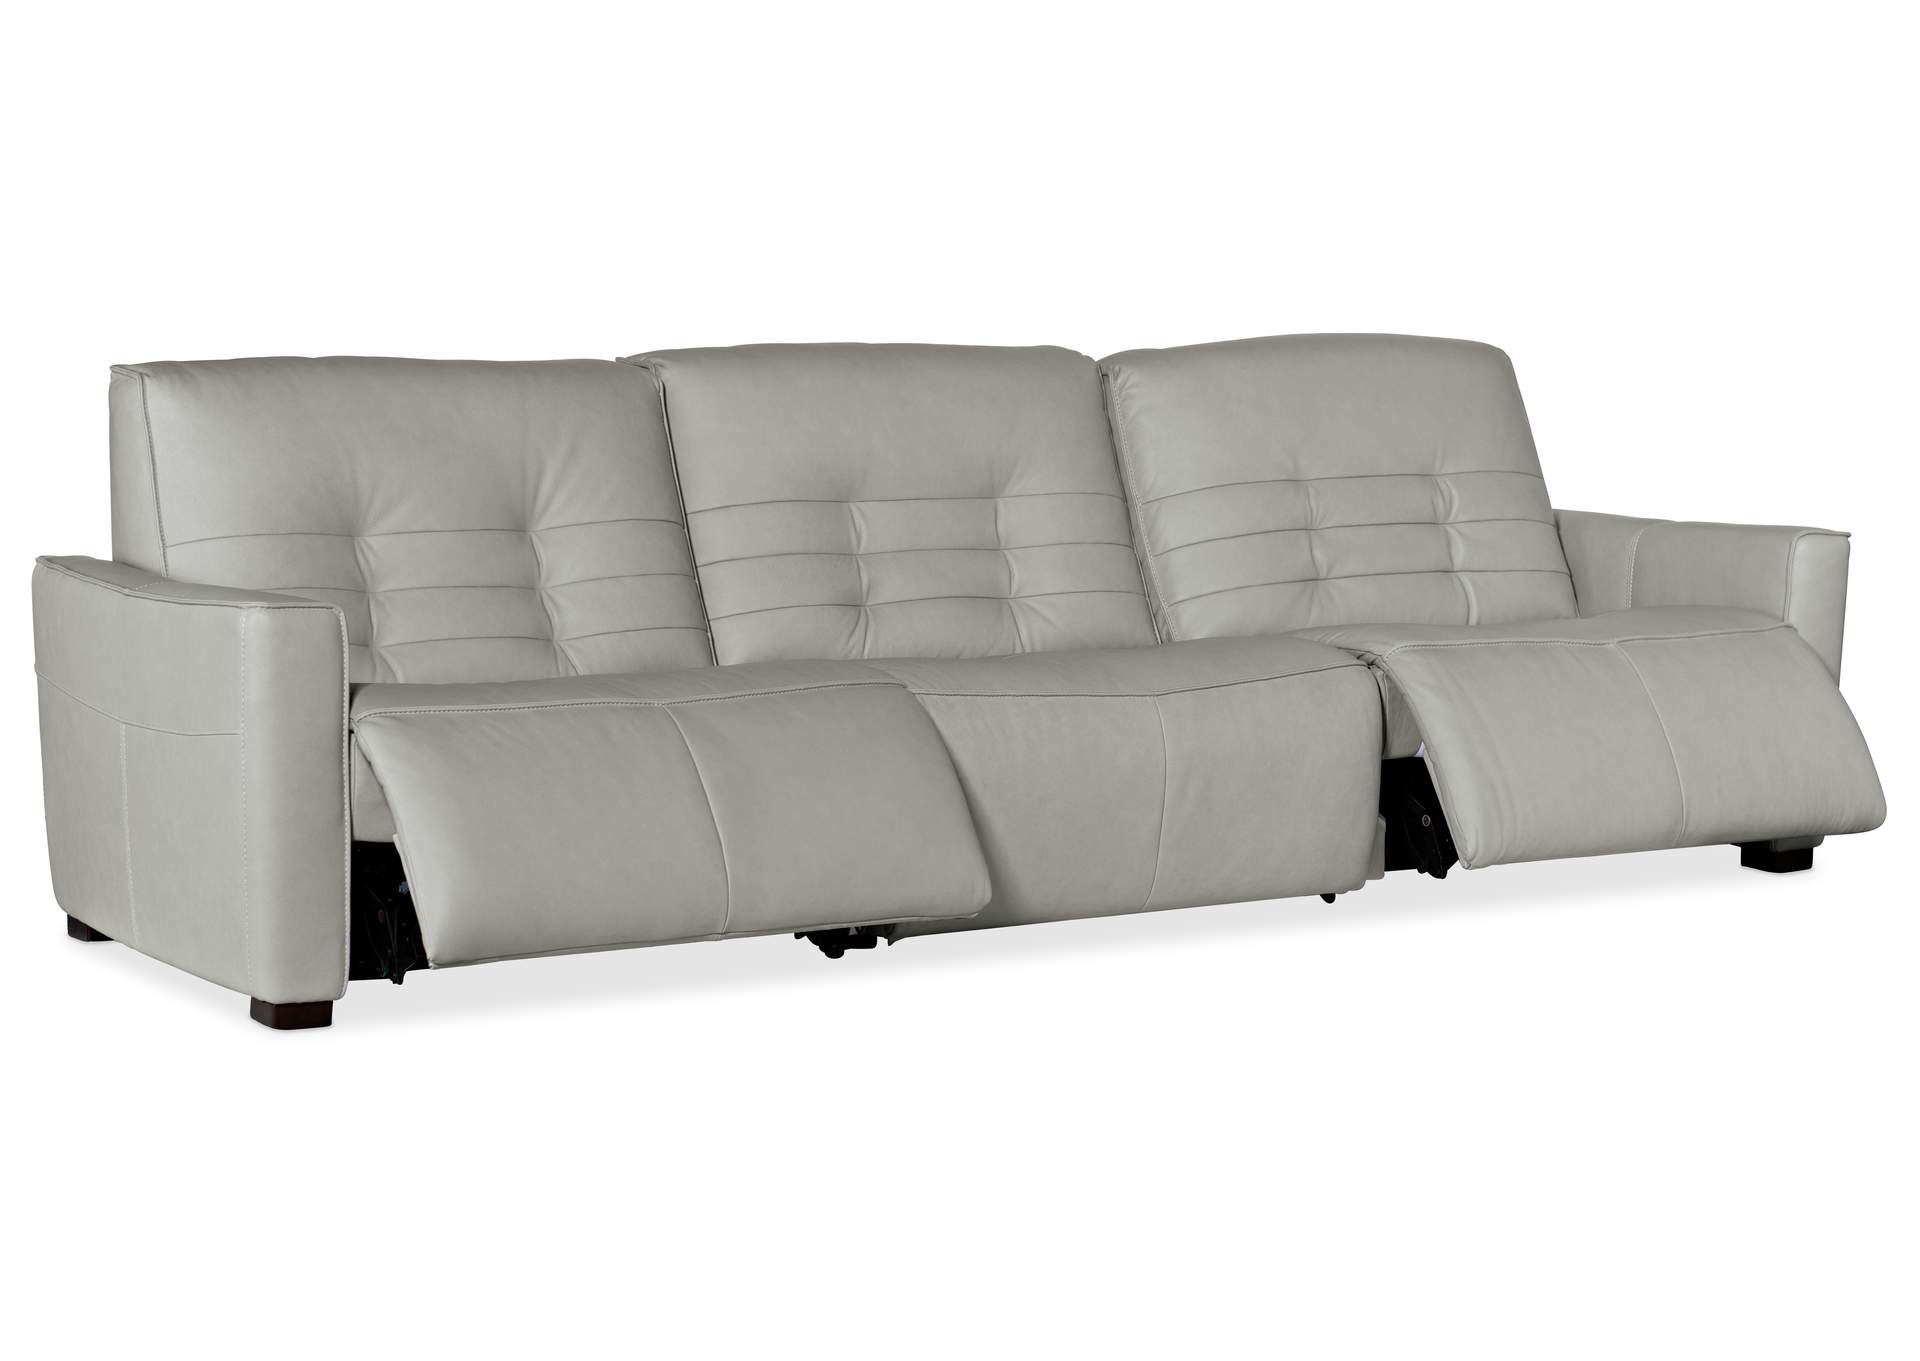 Reaux Power Recline Sofa W - 3 Power Recliners,Hooker Furniture